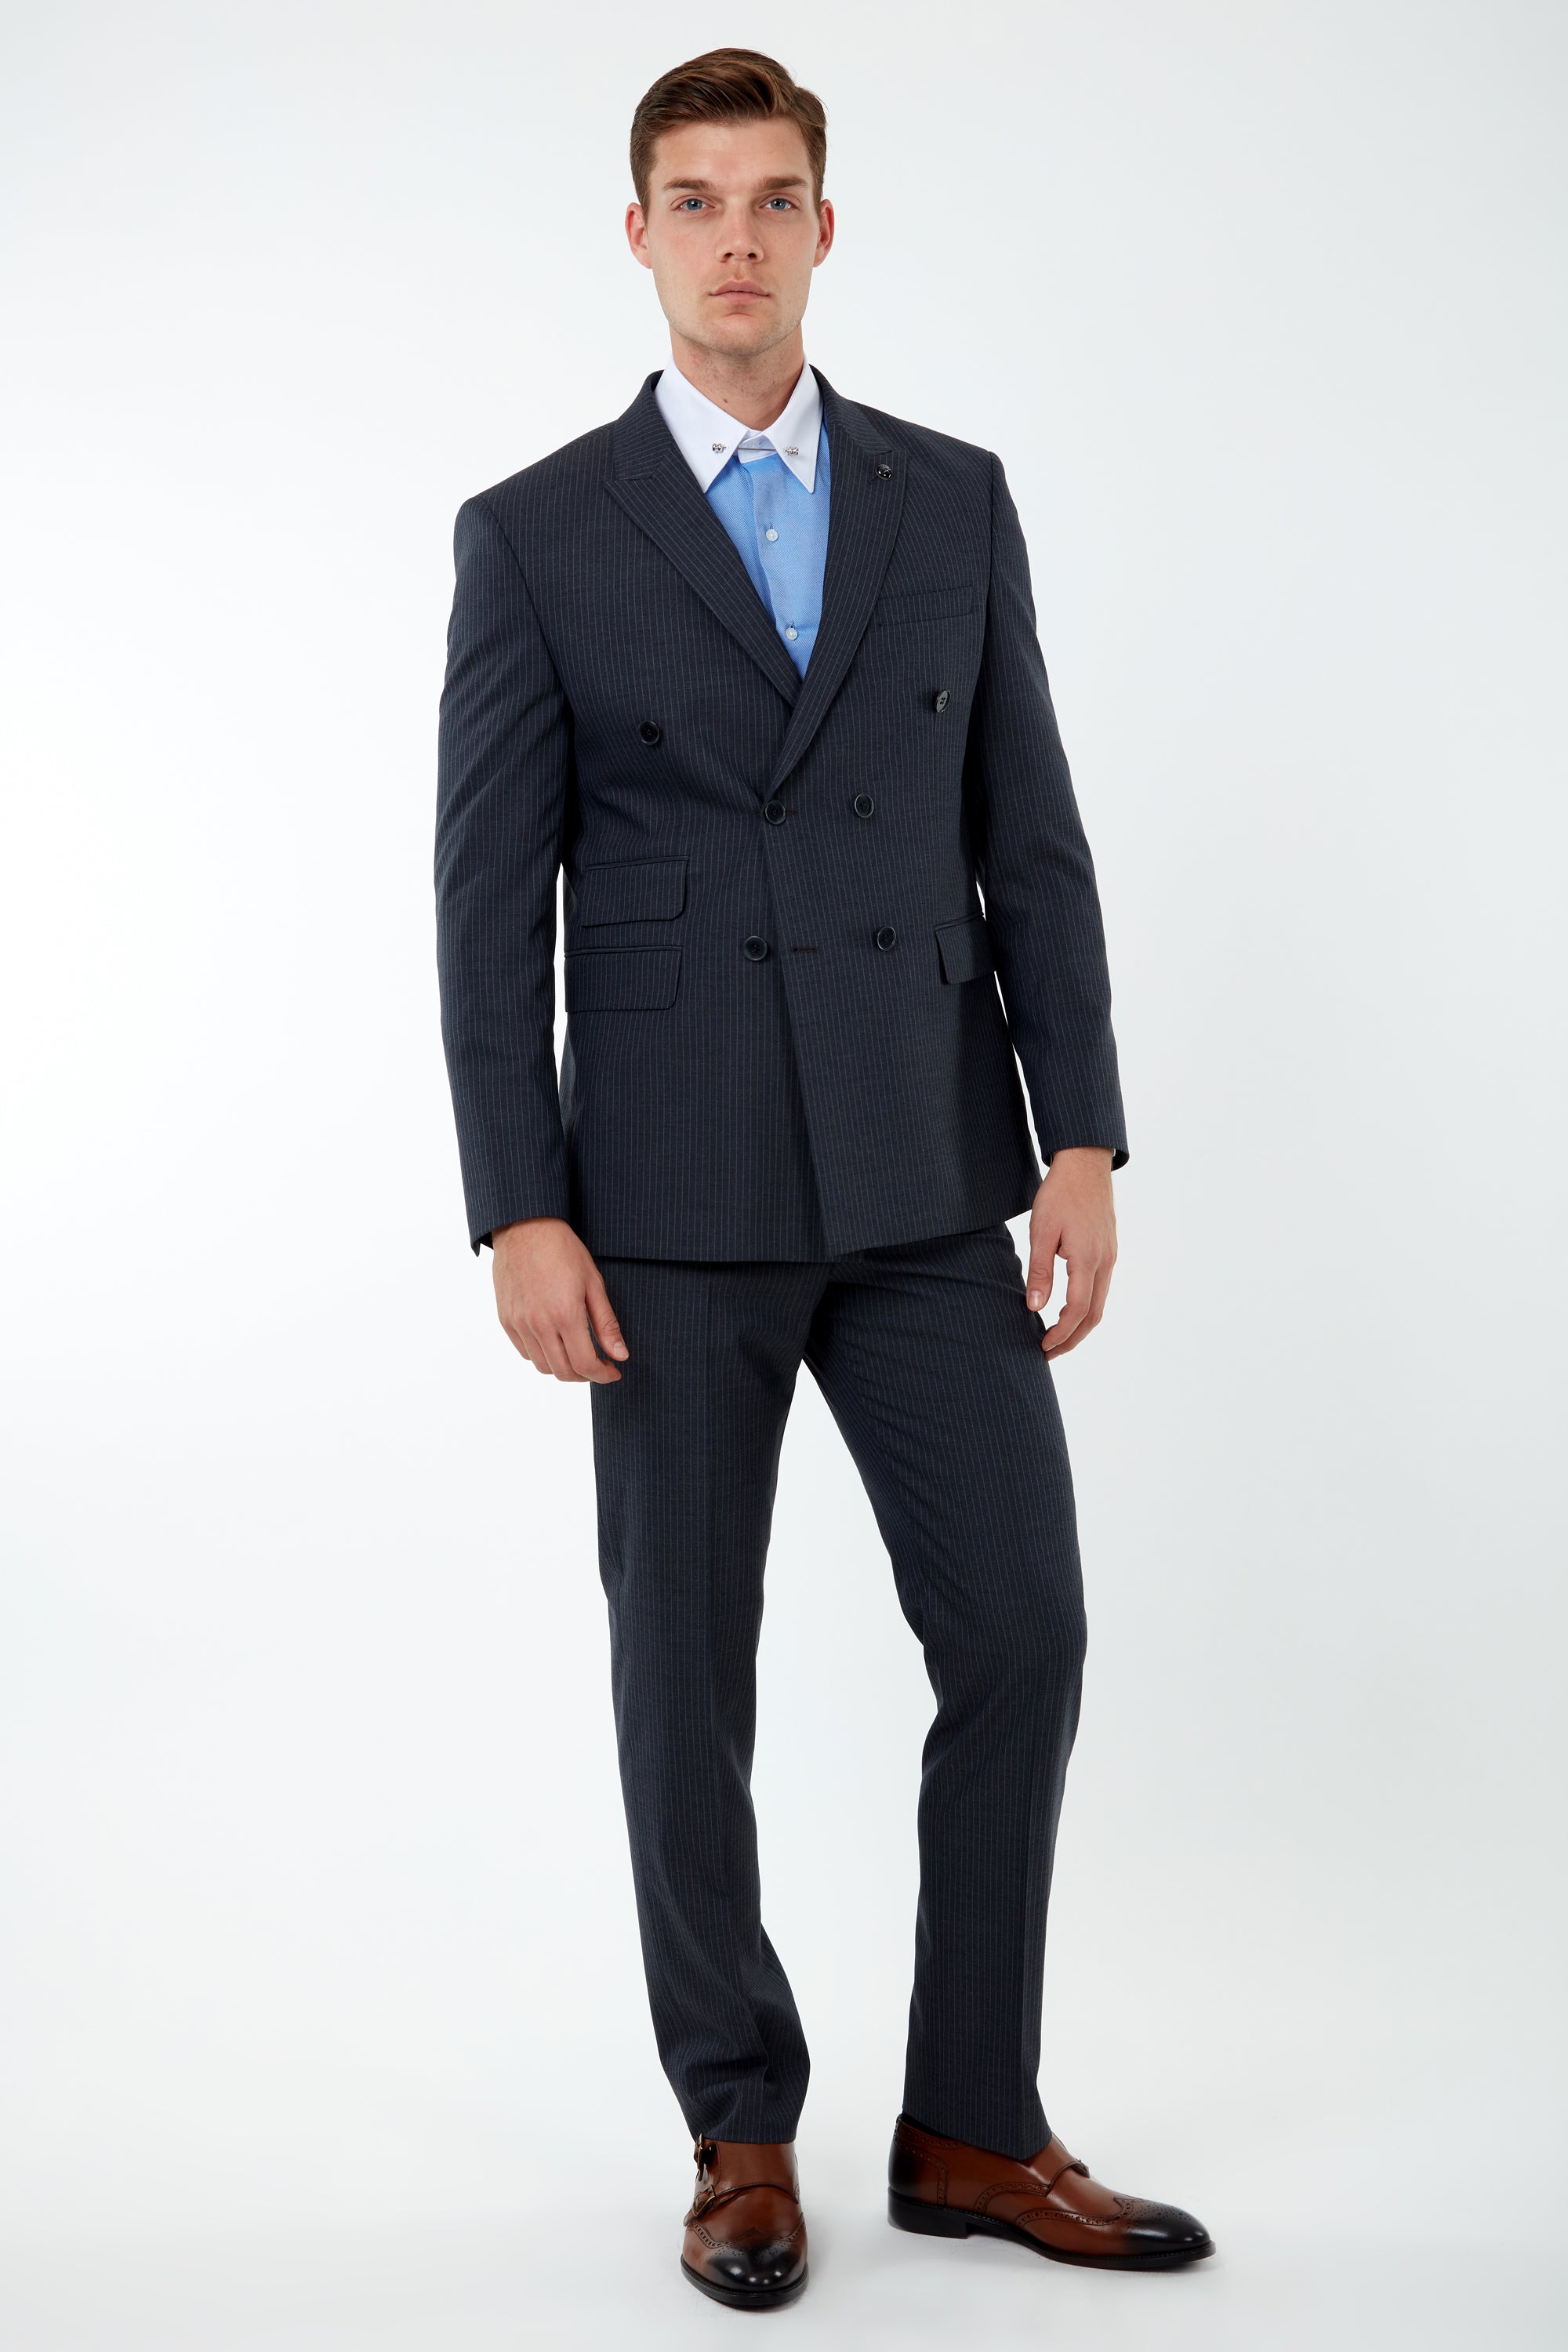 EDWARD - Grey Pinstripe Double Breasted Suit | Jack Martin